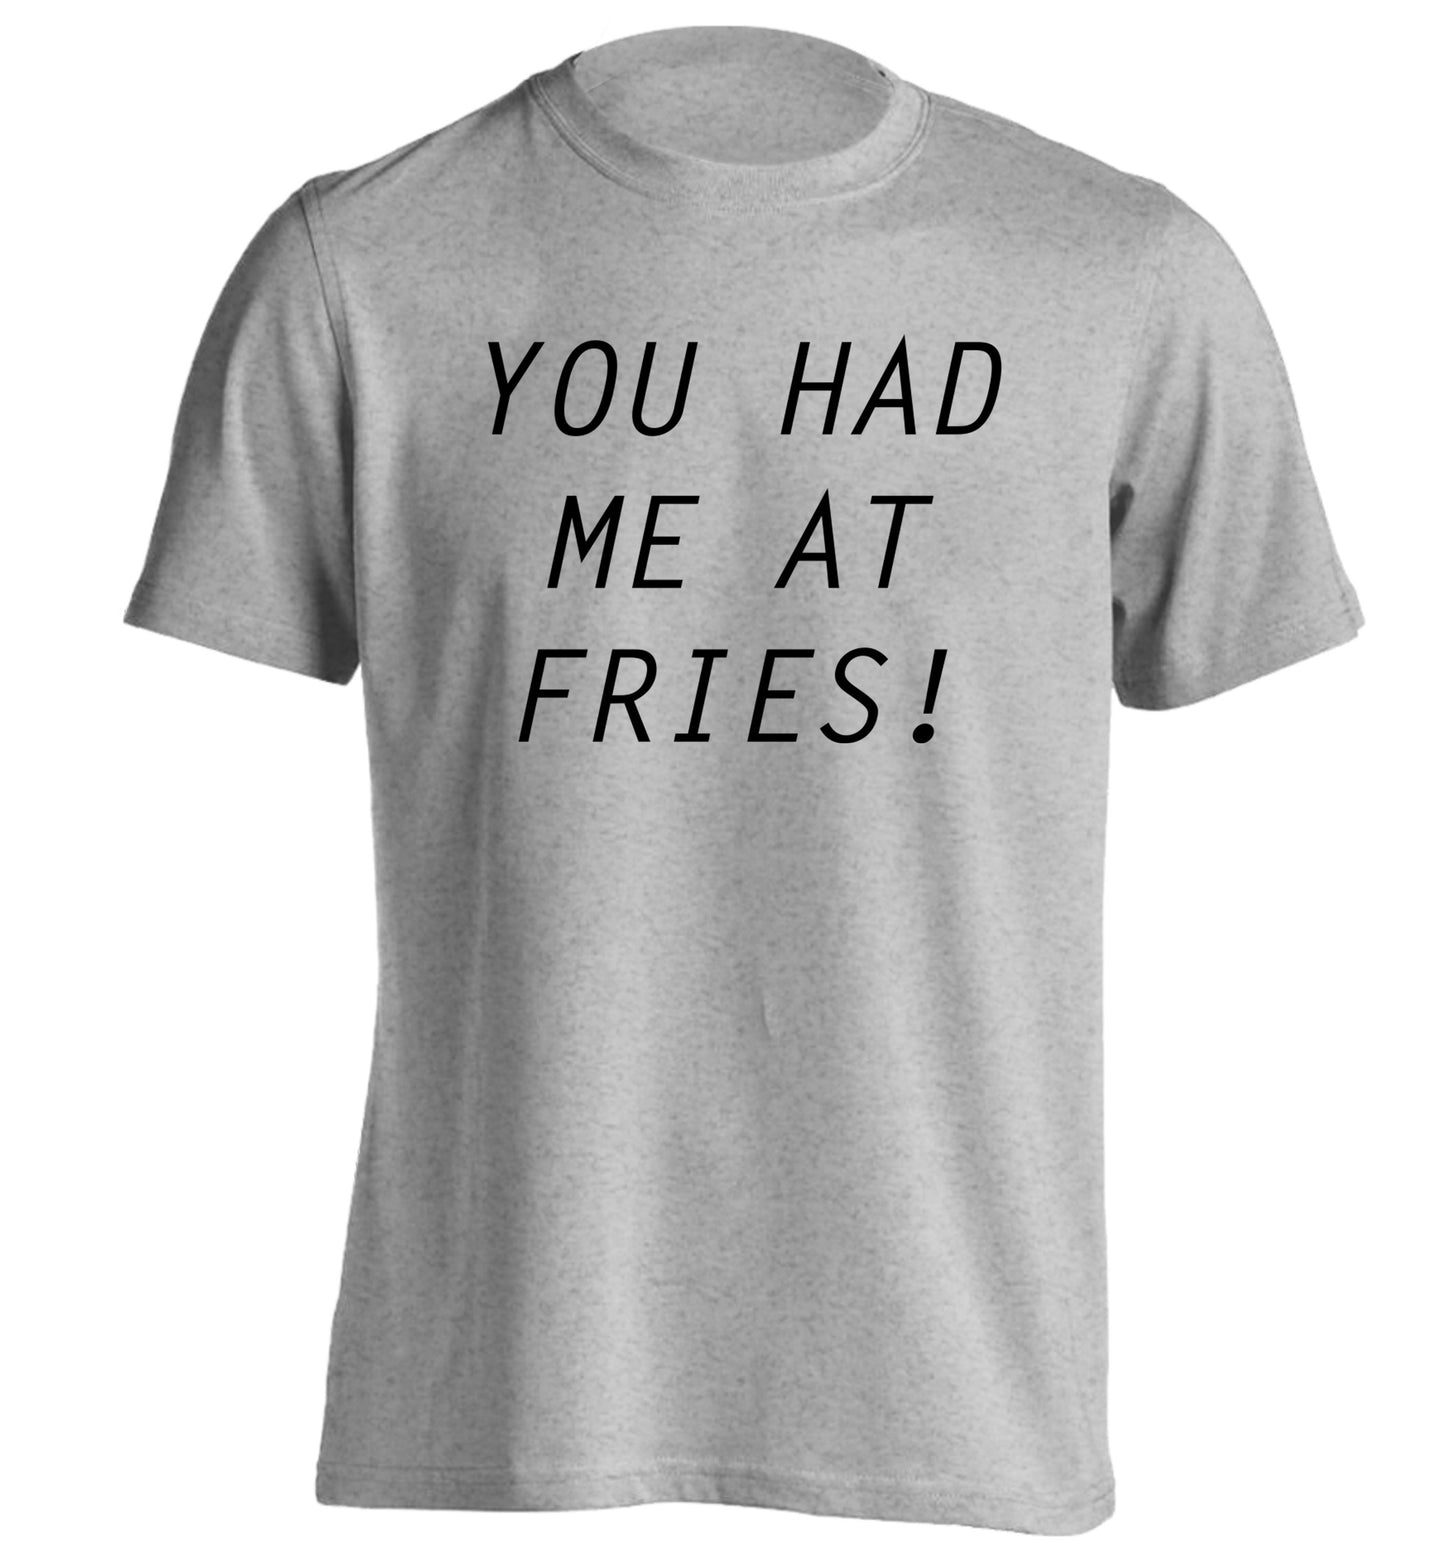 You had me at fries adults unisex grey Tshirt 2XL